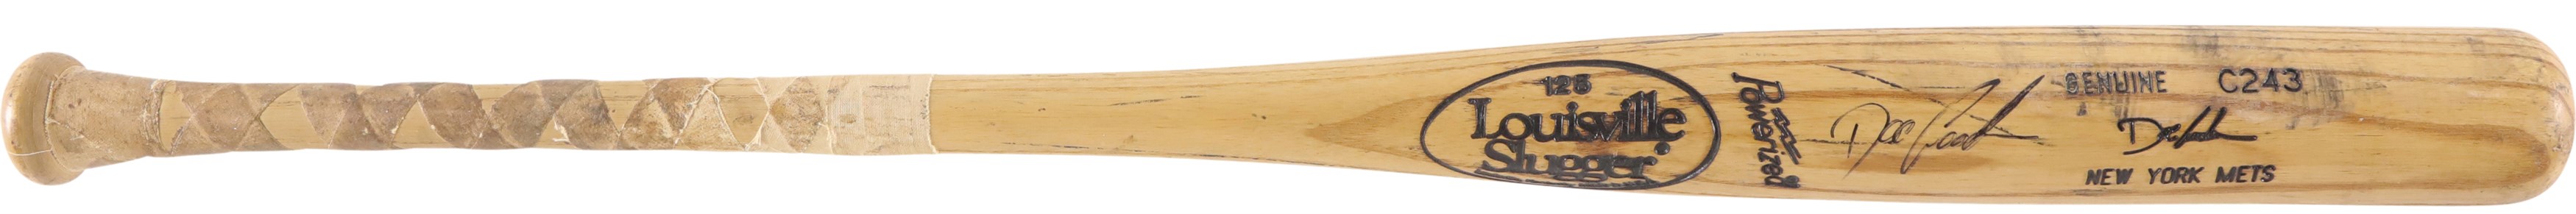 Baseball Equipment - 1993 Dwight Gooden New York Mets Game Used Bat (PSA GU 10)